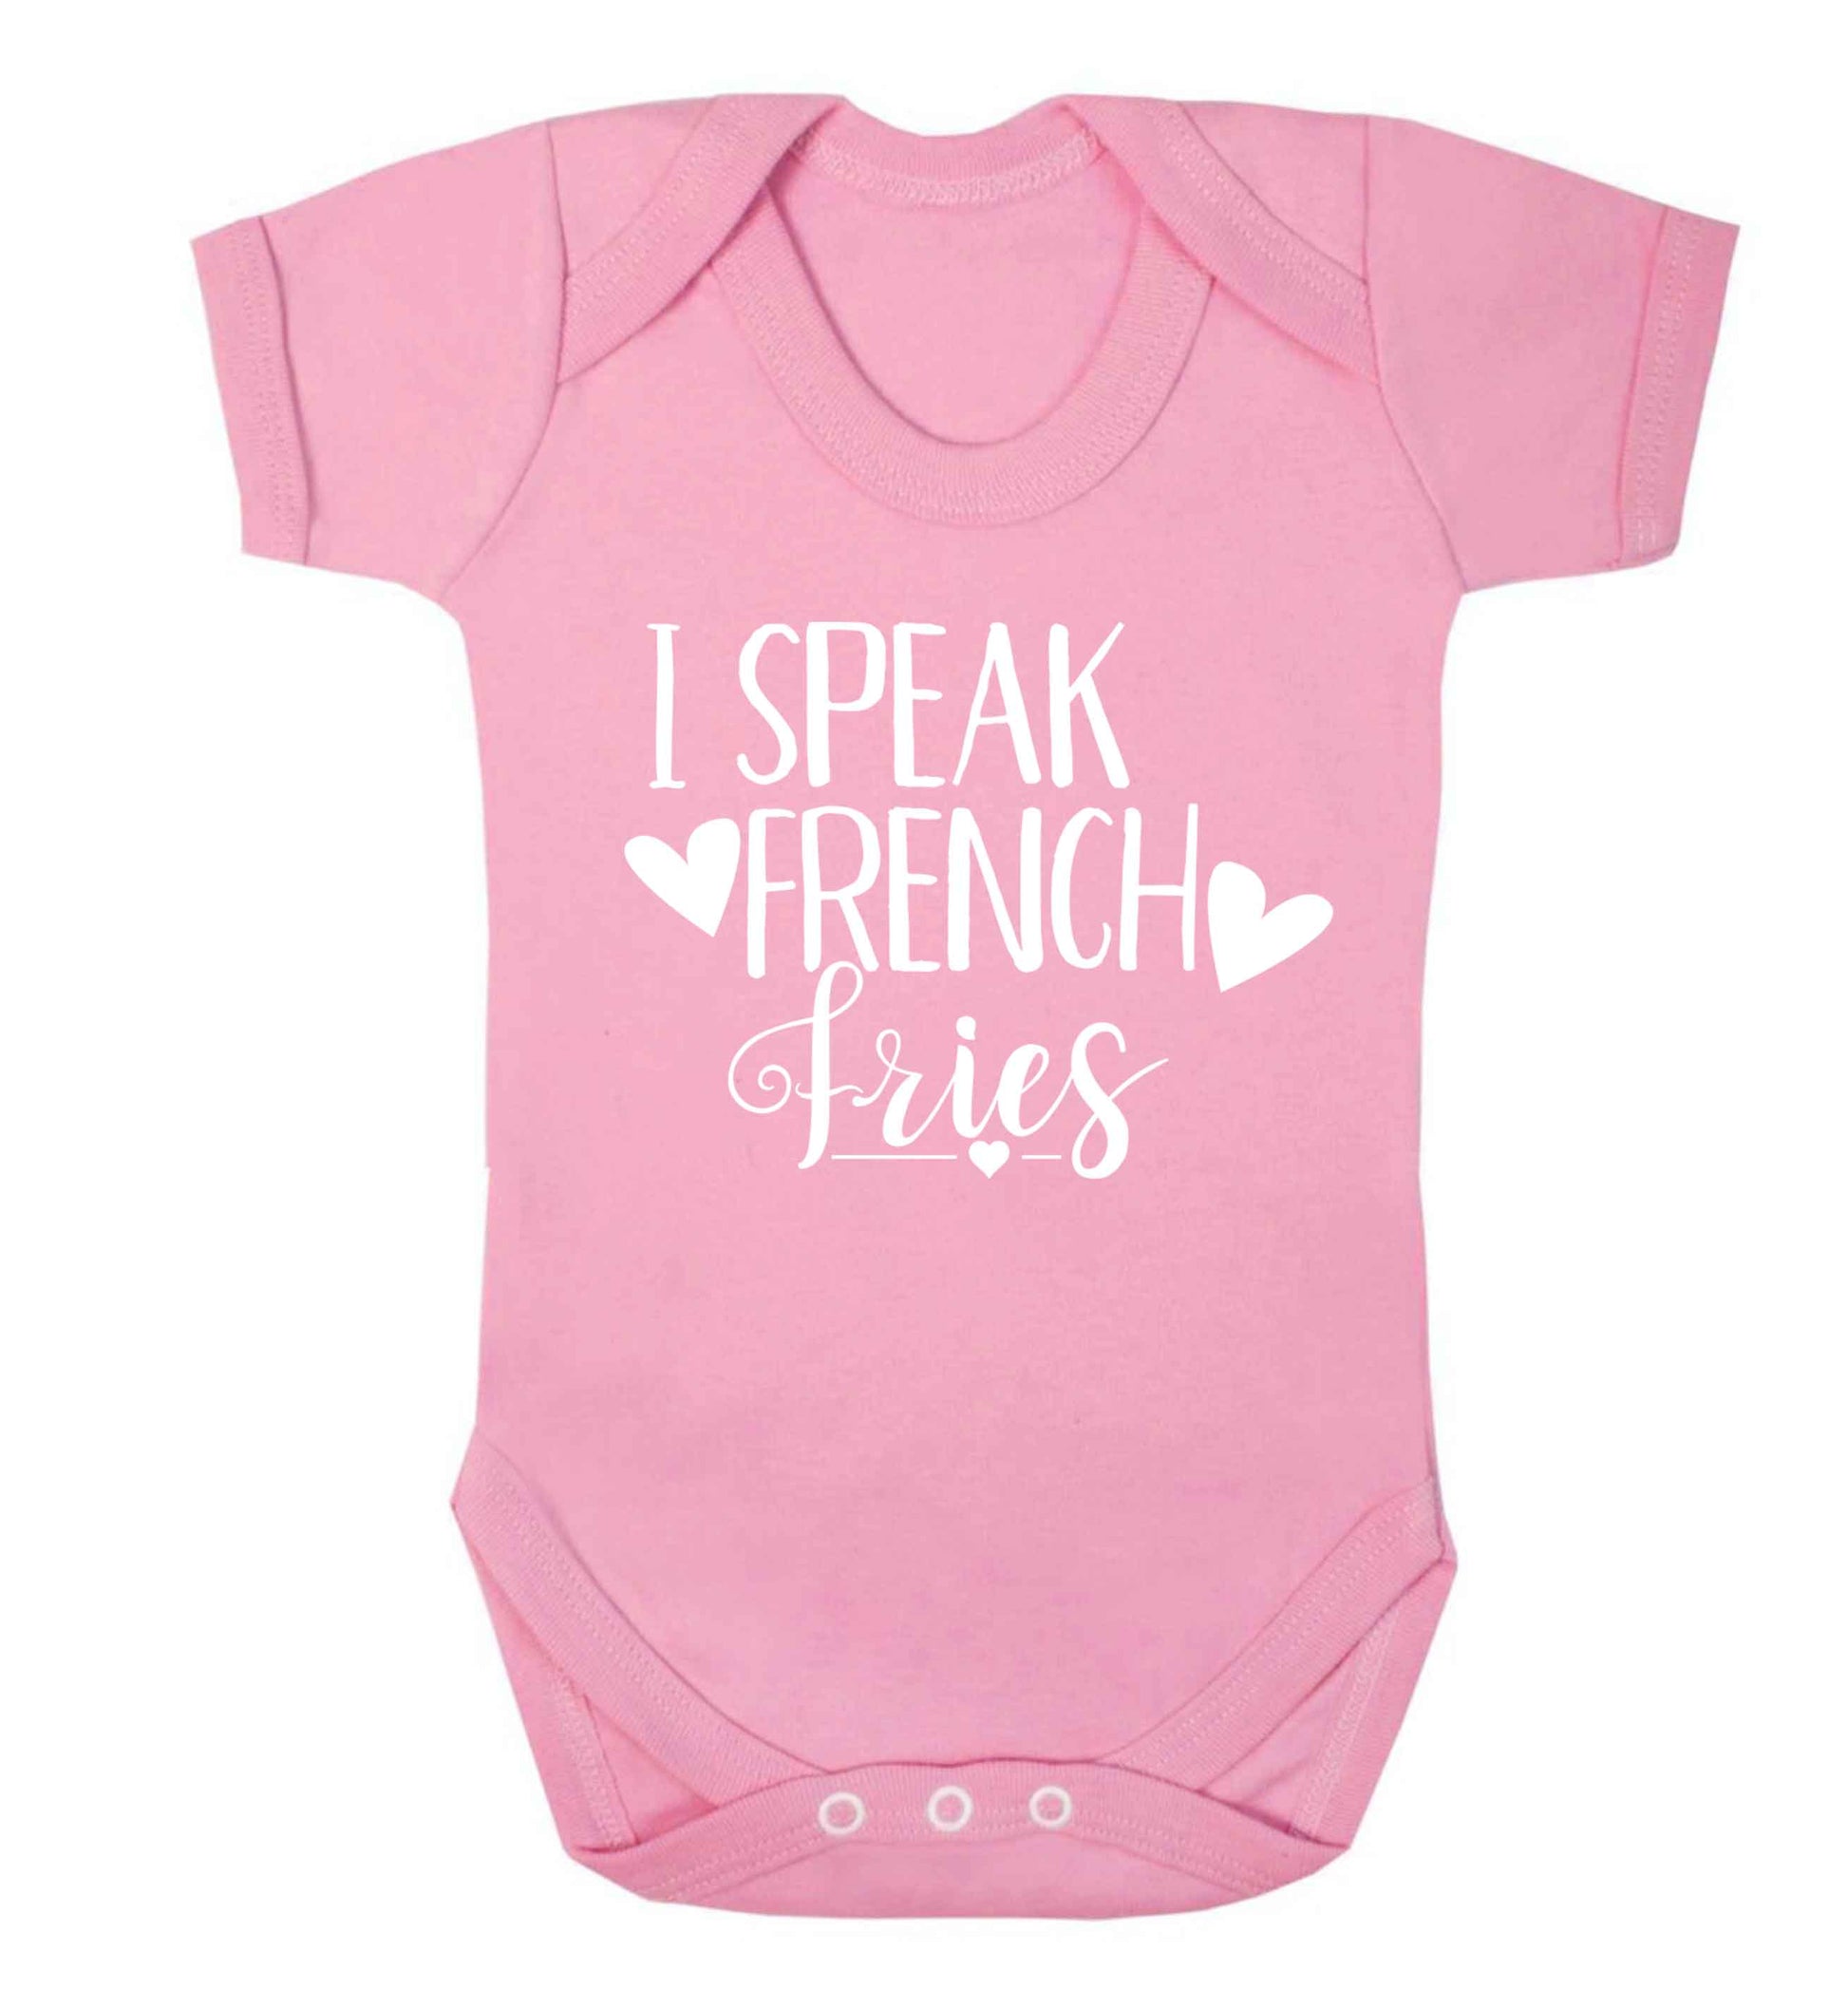 I speak French fries Baby Vest pale pink 18-24 months